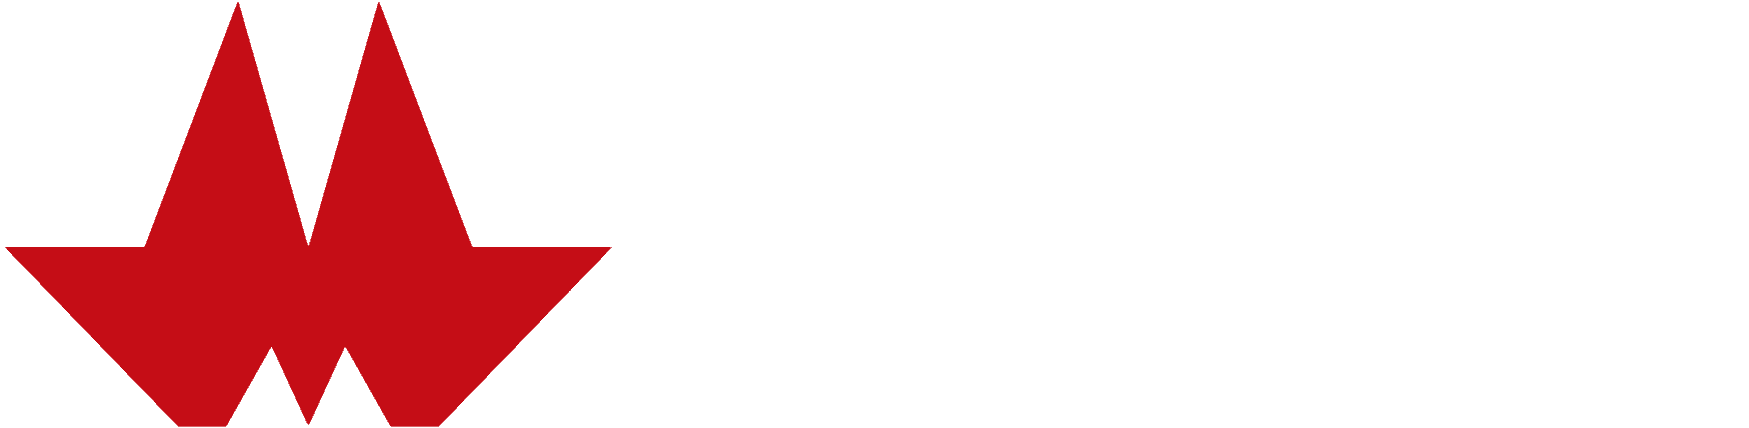 Agenzia Moreno logo